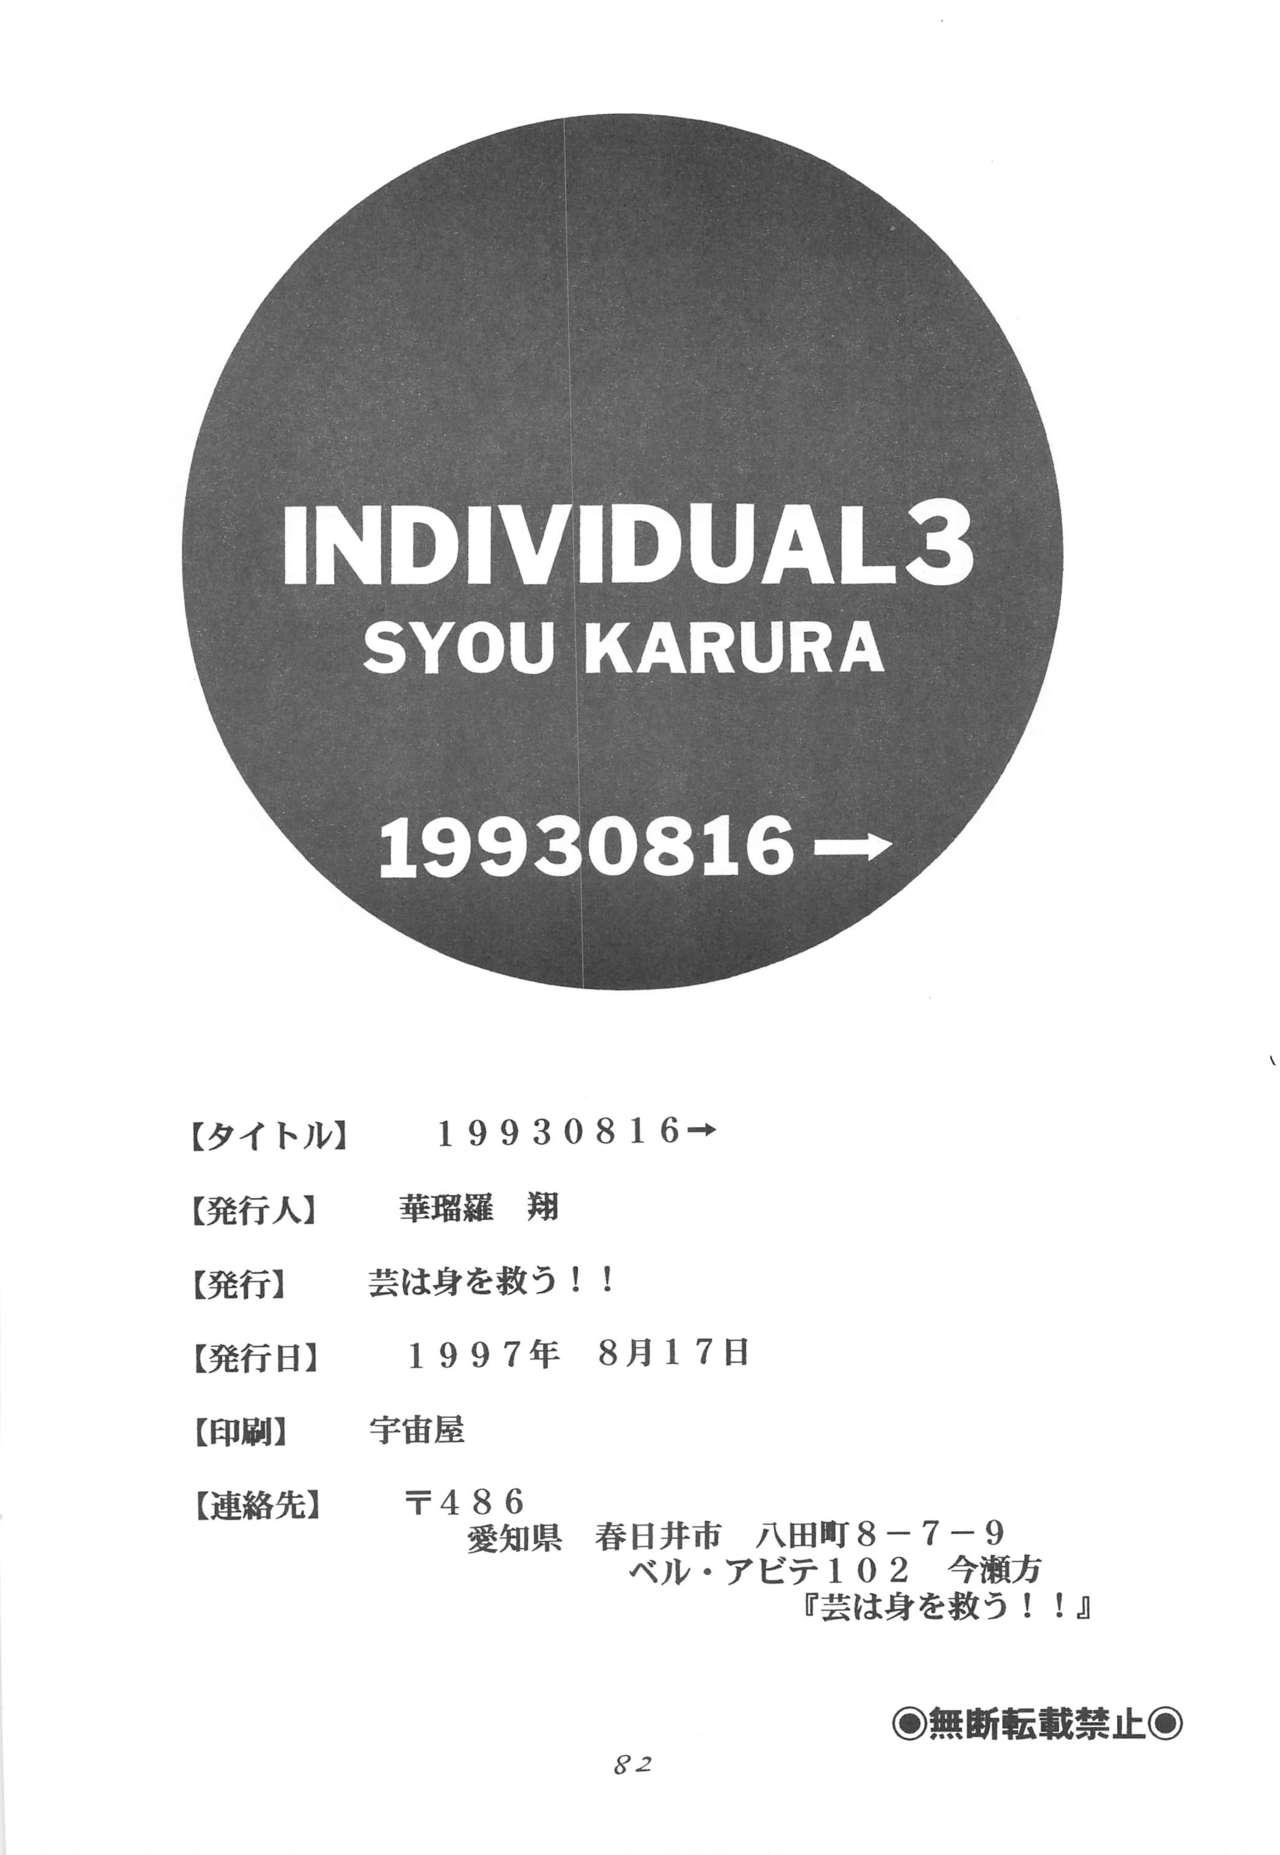 INDIVIDUAL 3 - 19930816 → 81